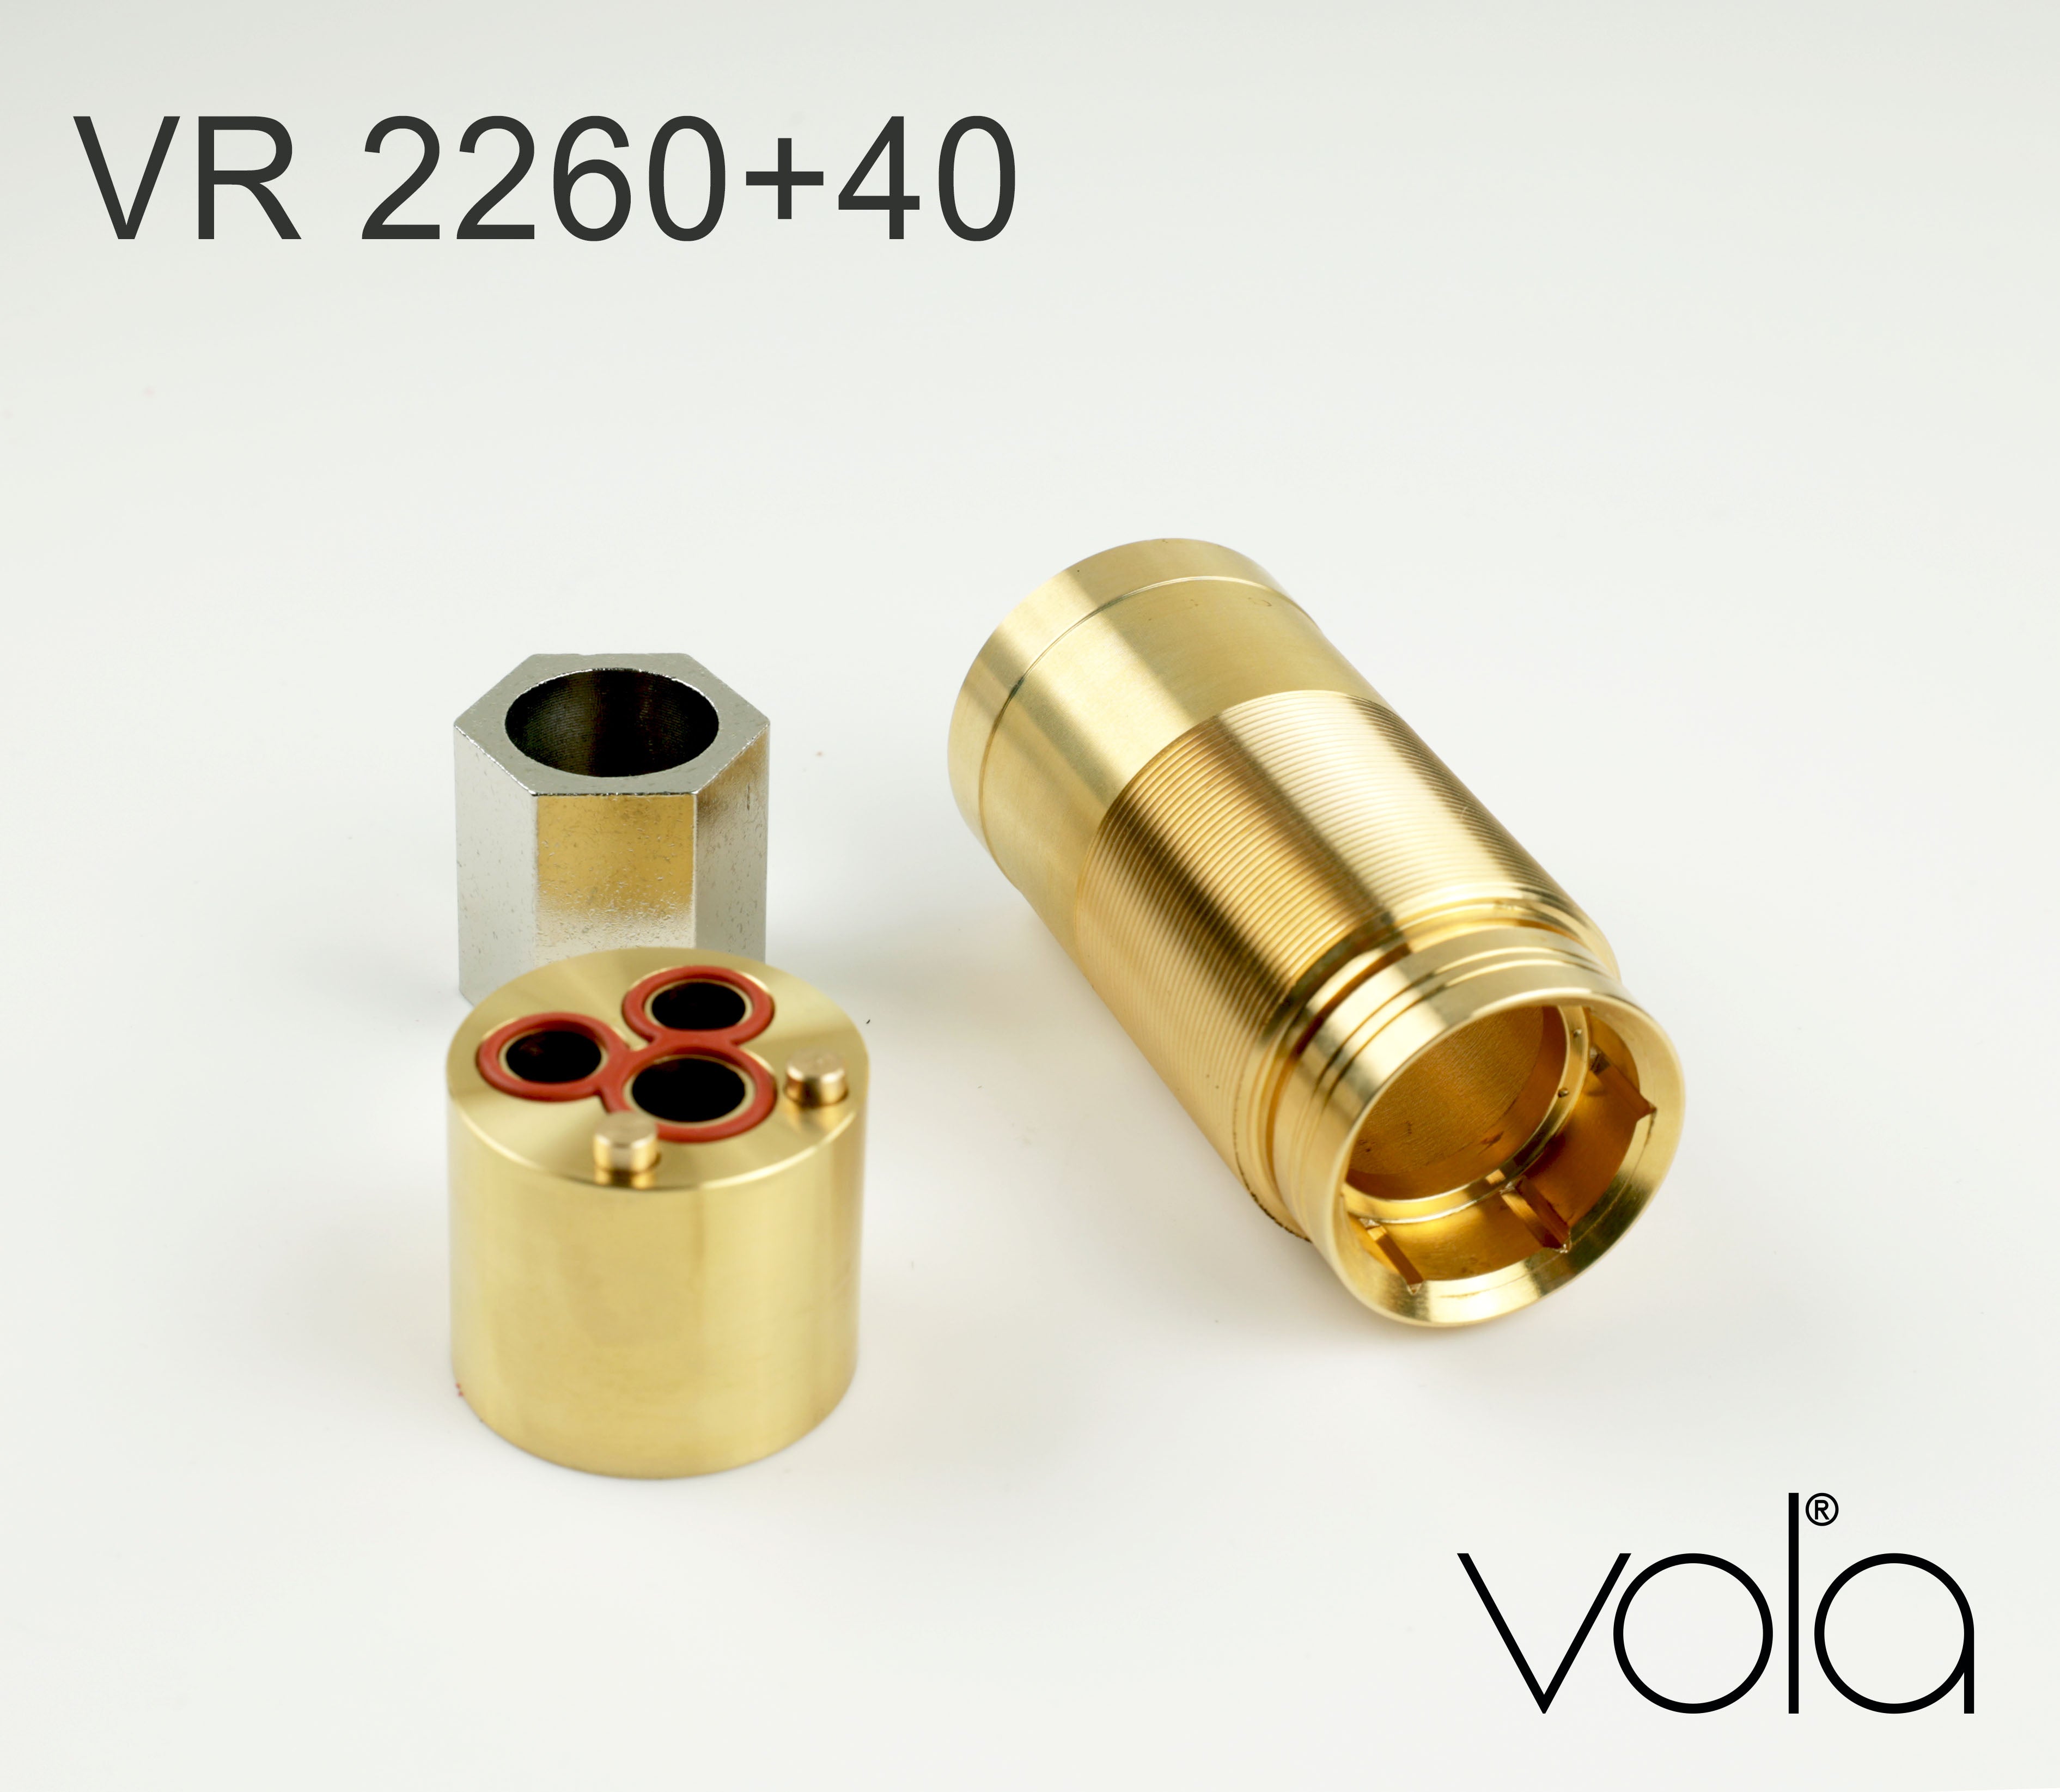 VOLA VR2260+40